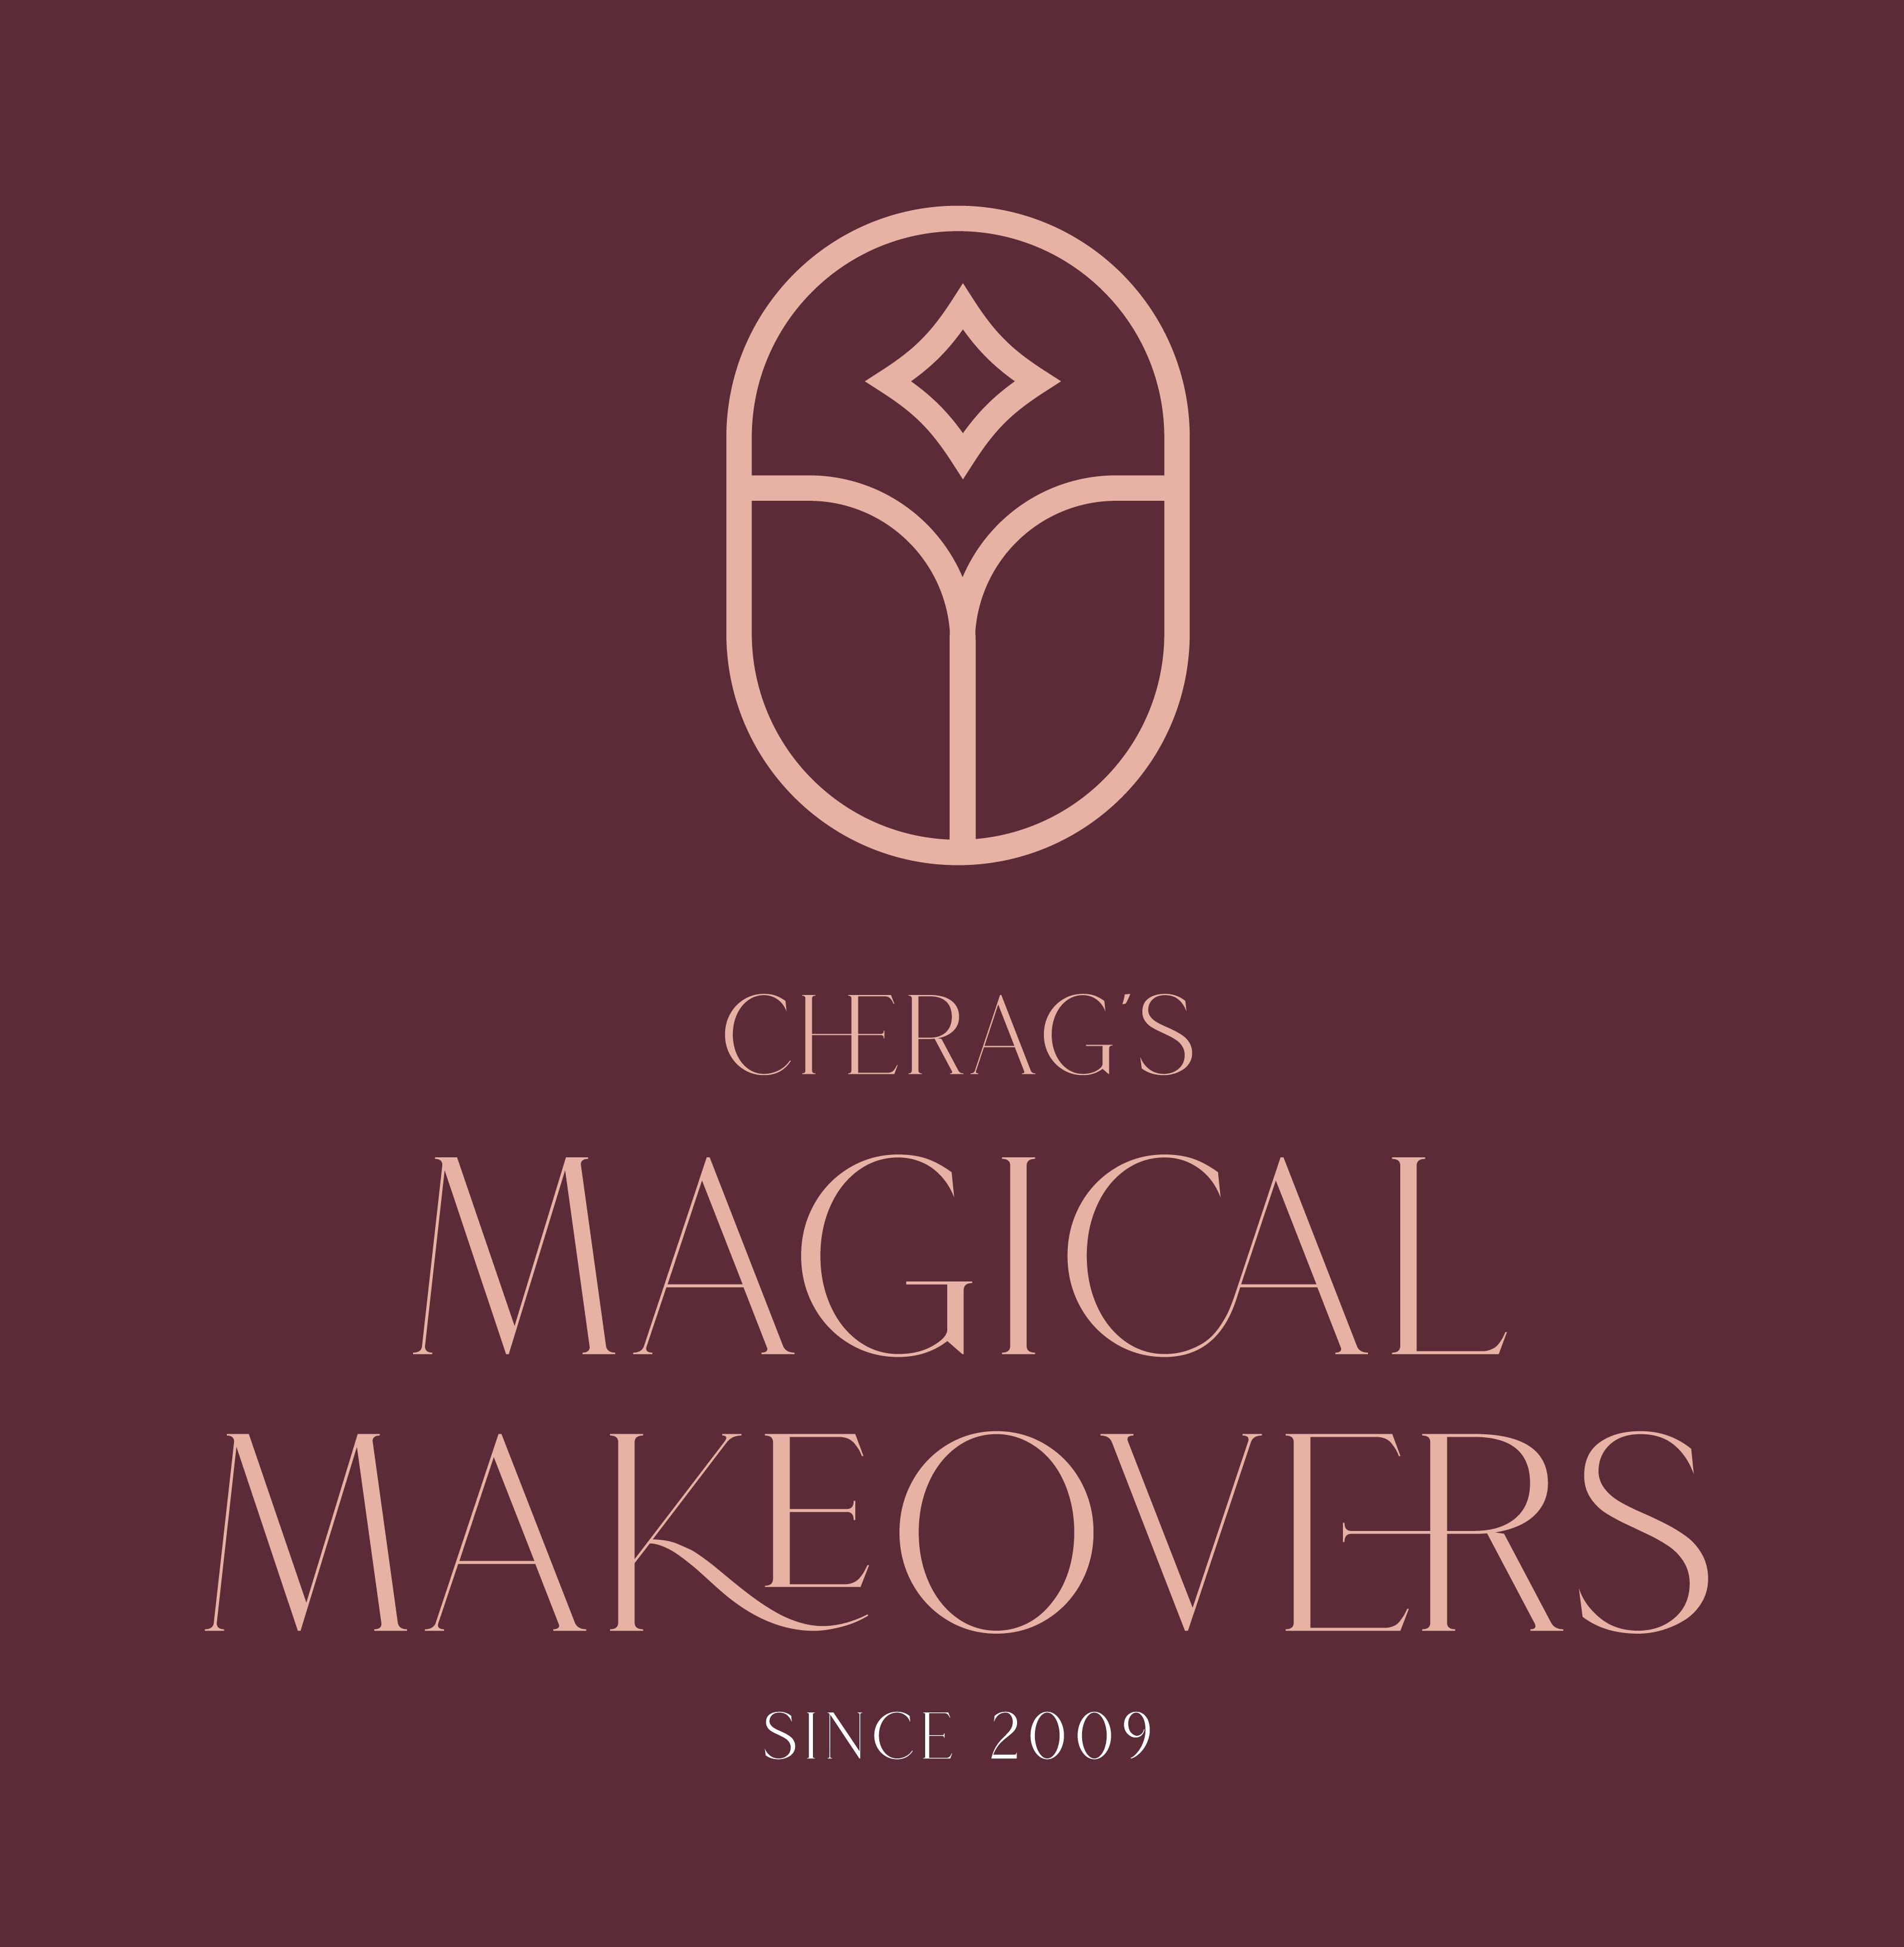 Cherag's Magical Makeover